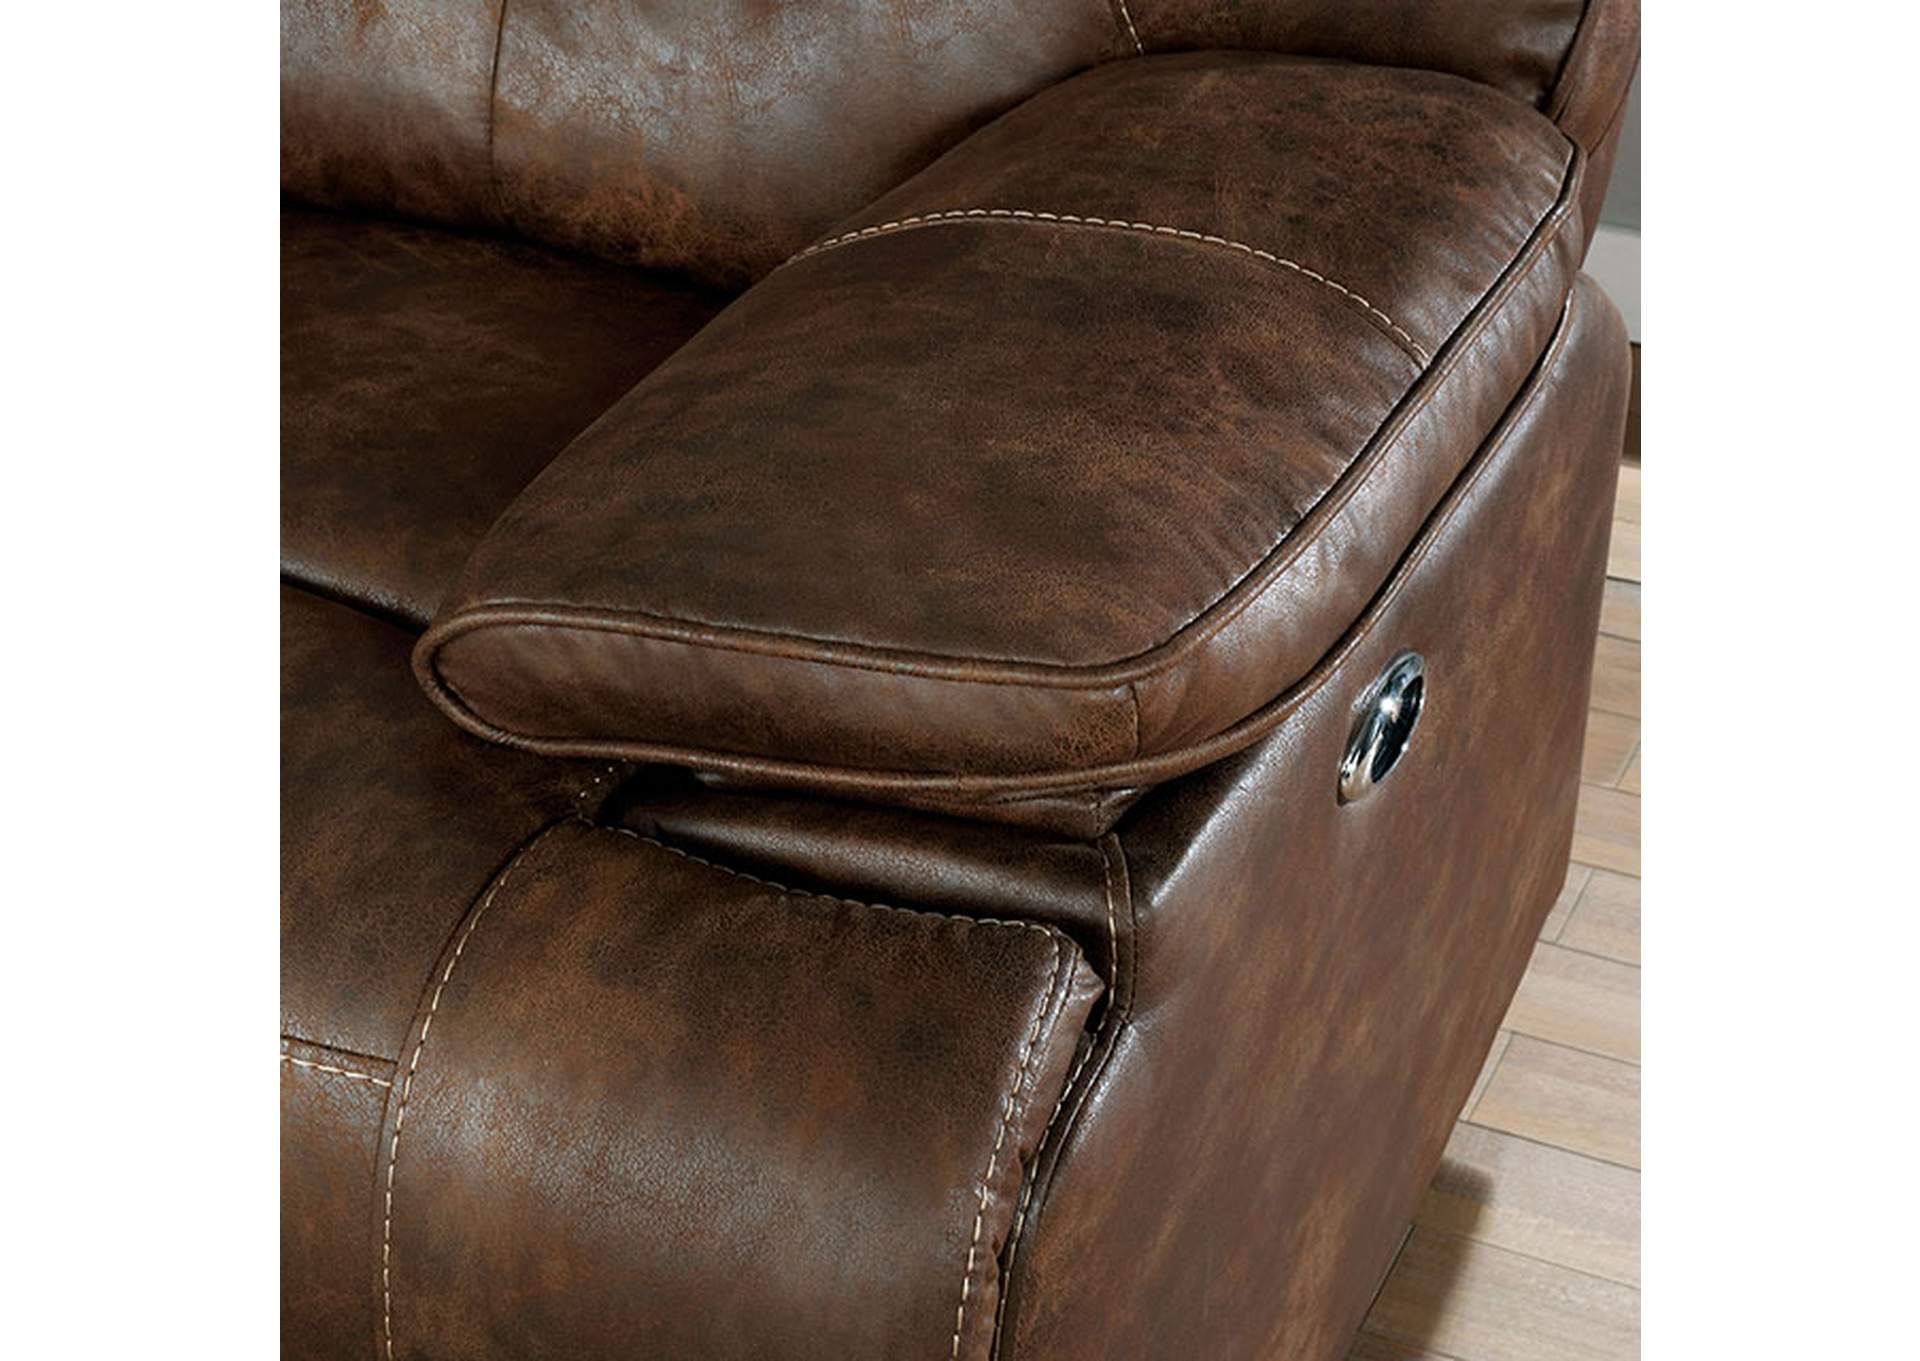 Chantoise Power Sofa,Furniture of America